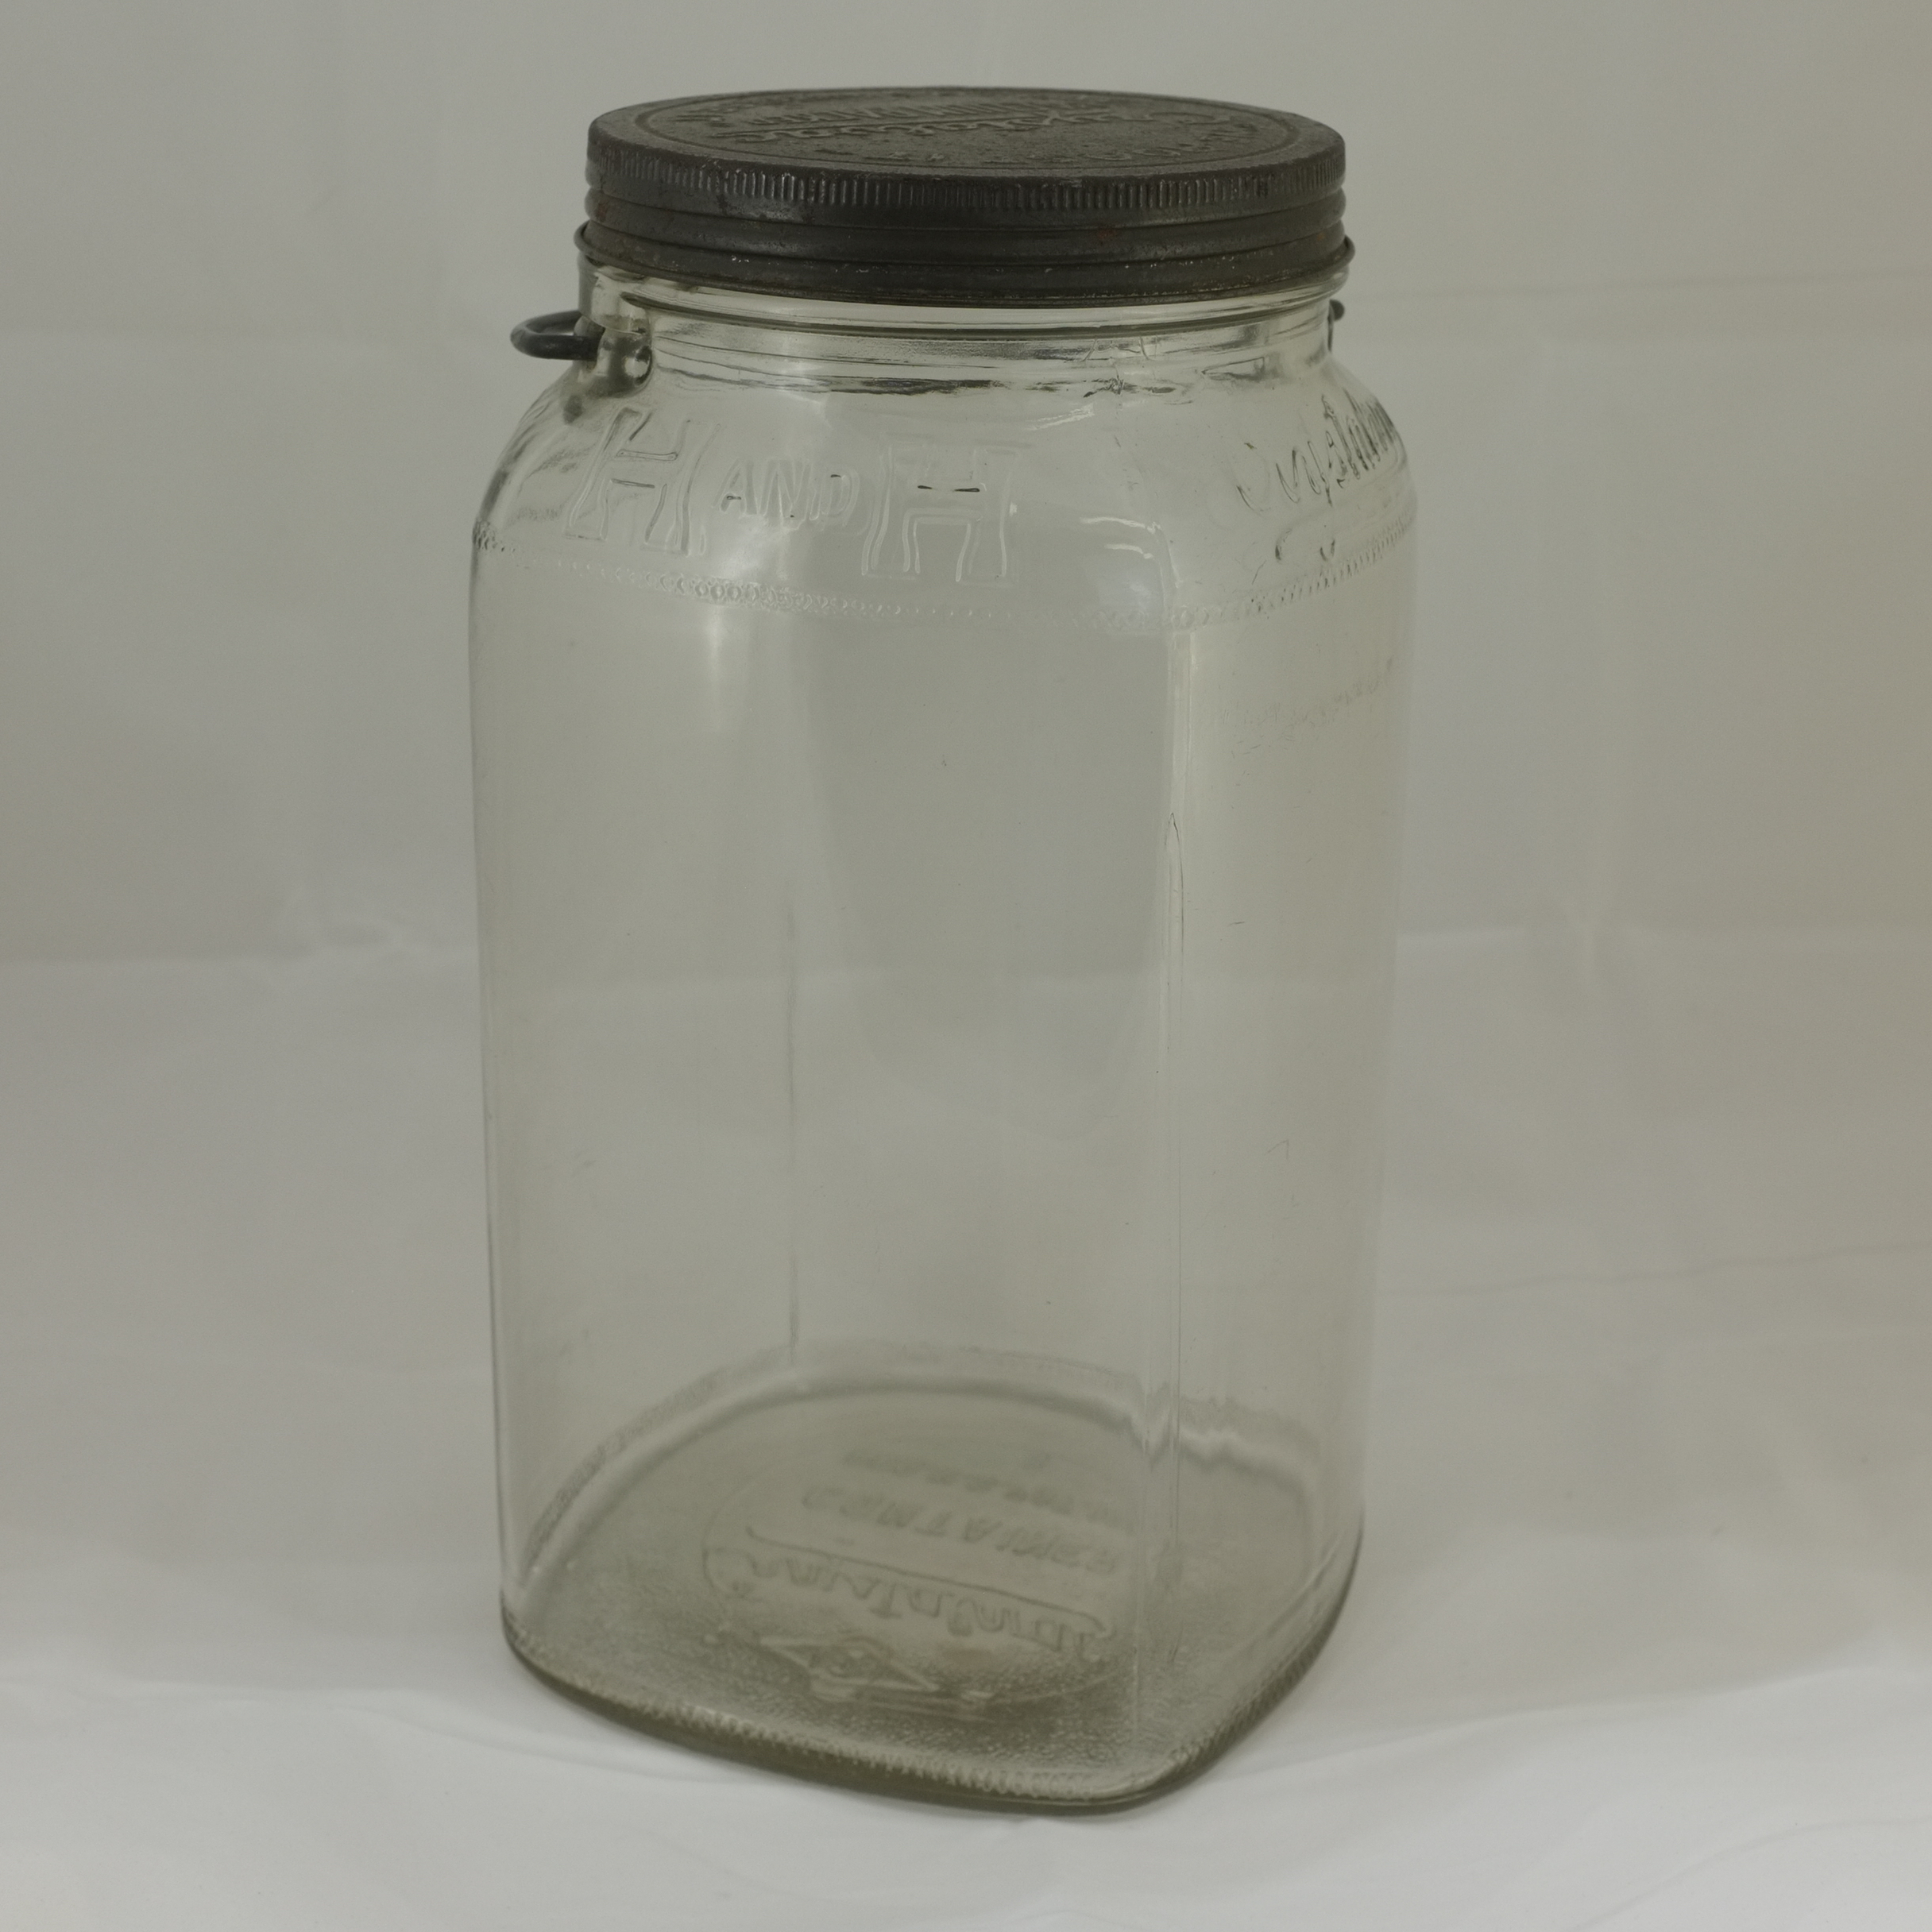 H and H Large Crystalvac Jar